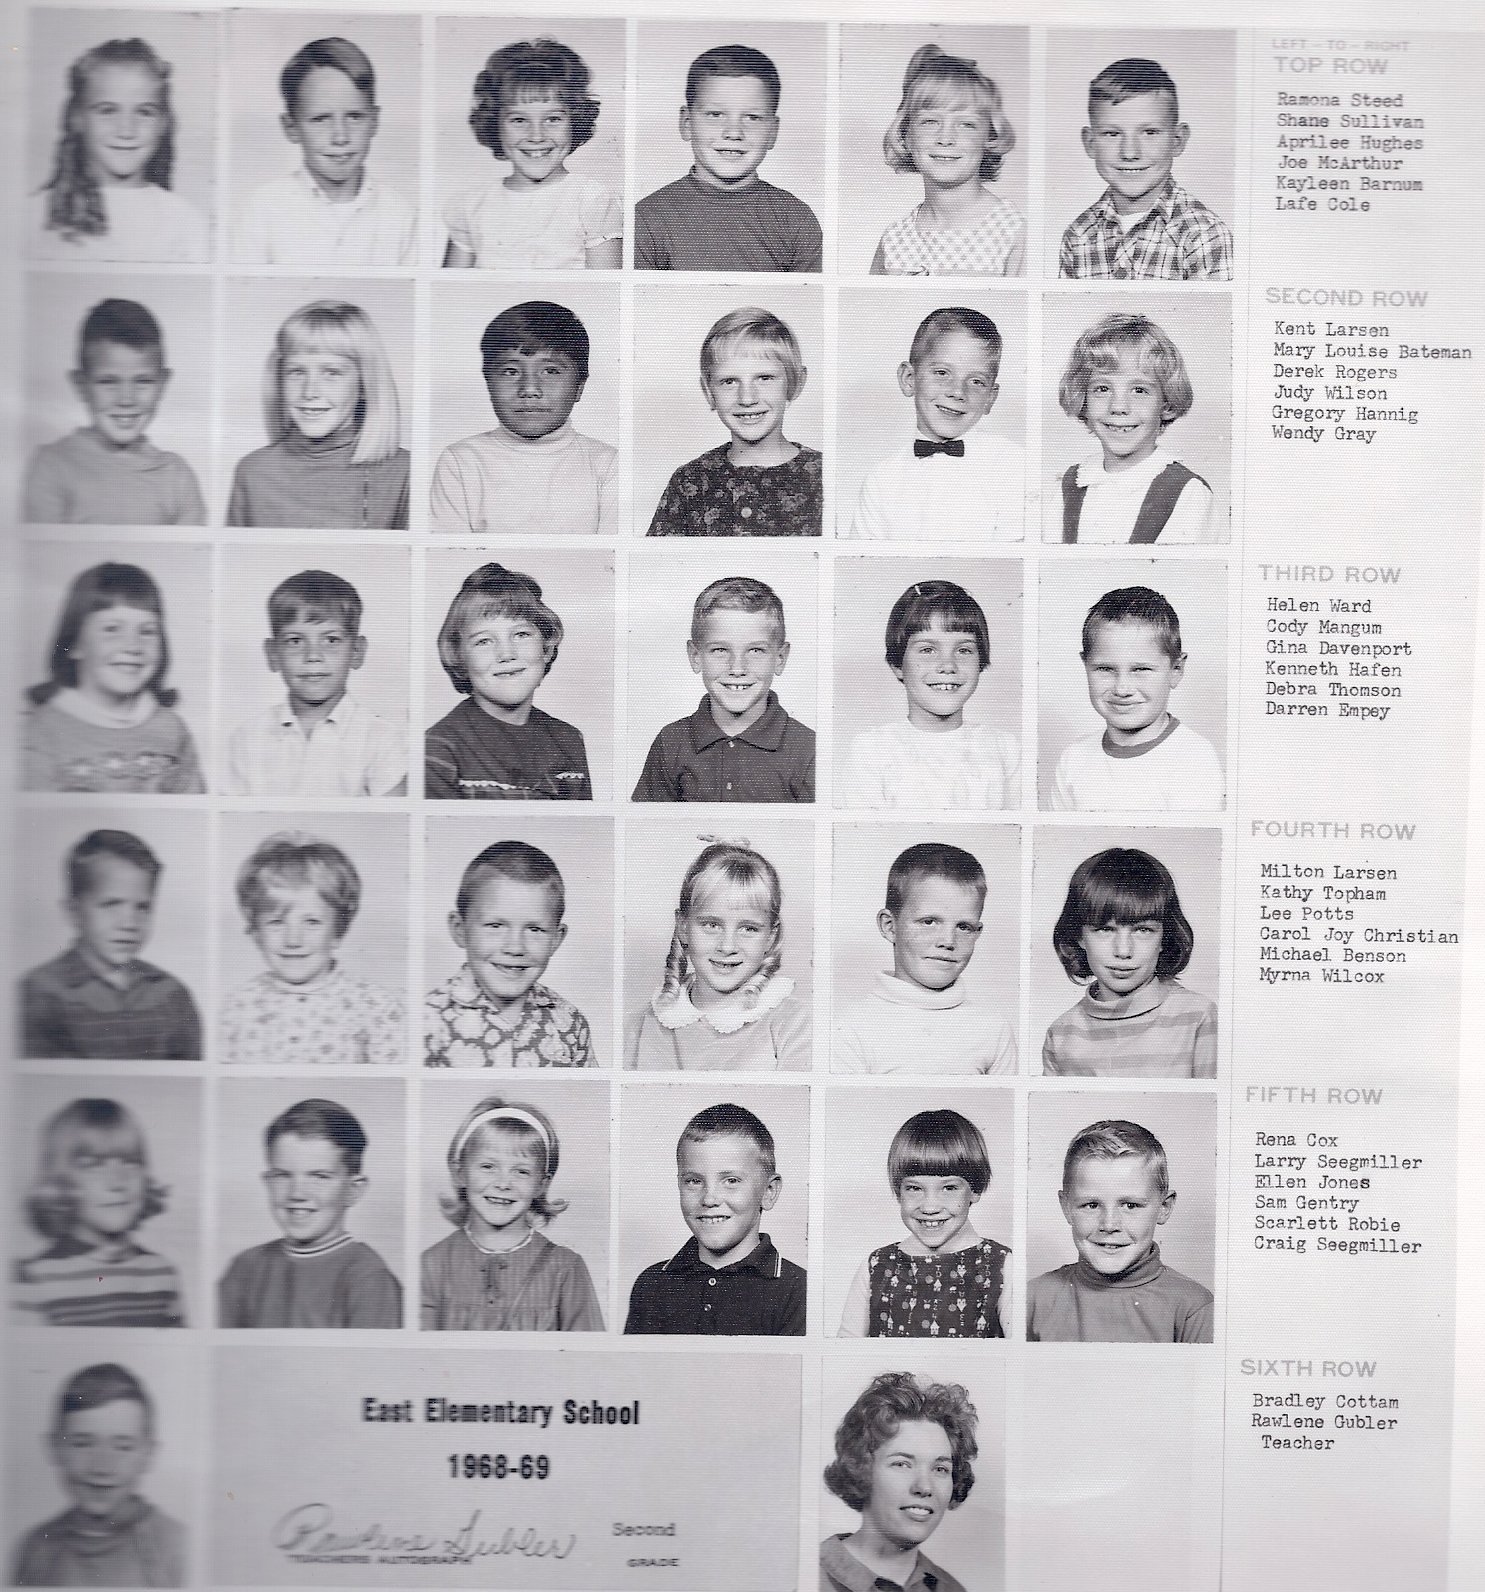 Mrs. Rawlene Gubler's 1968-1969 second grade class at East Elementary School